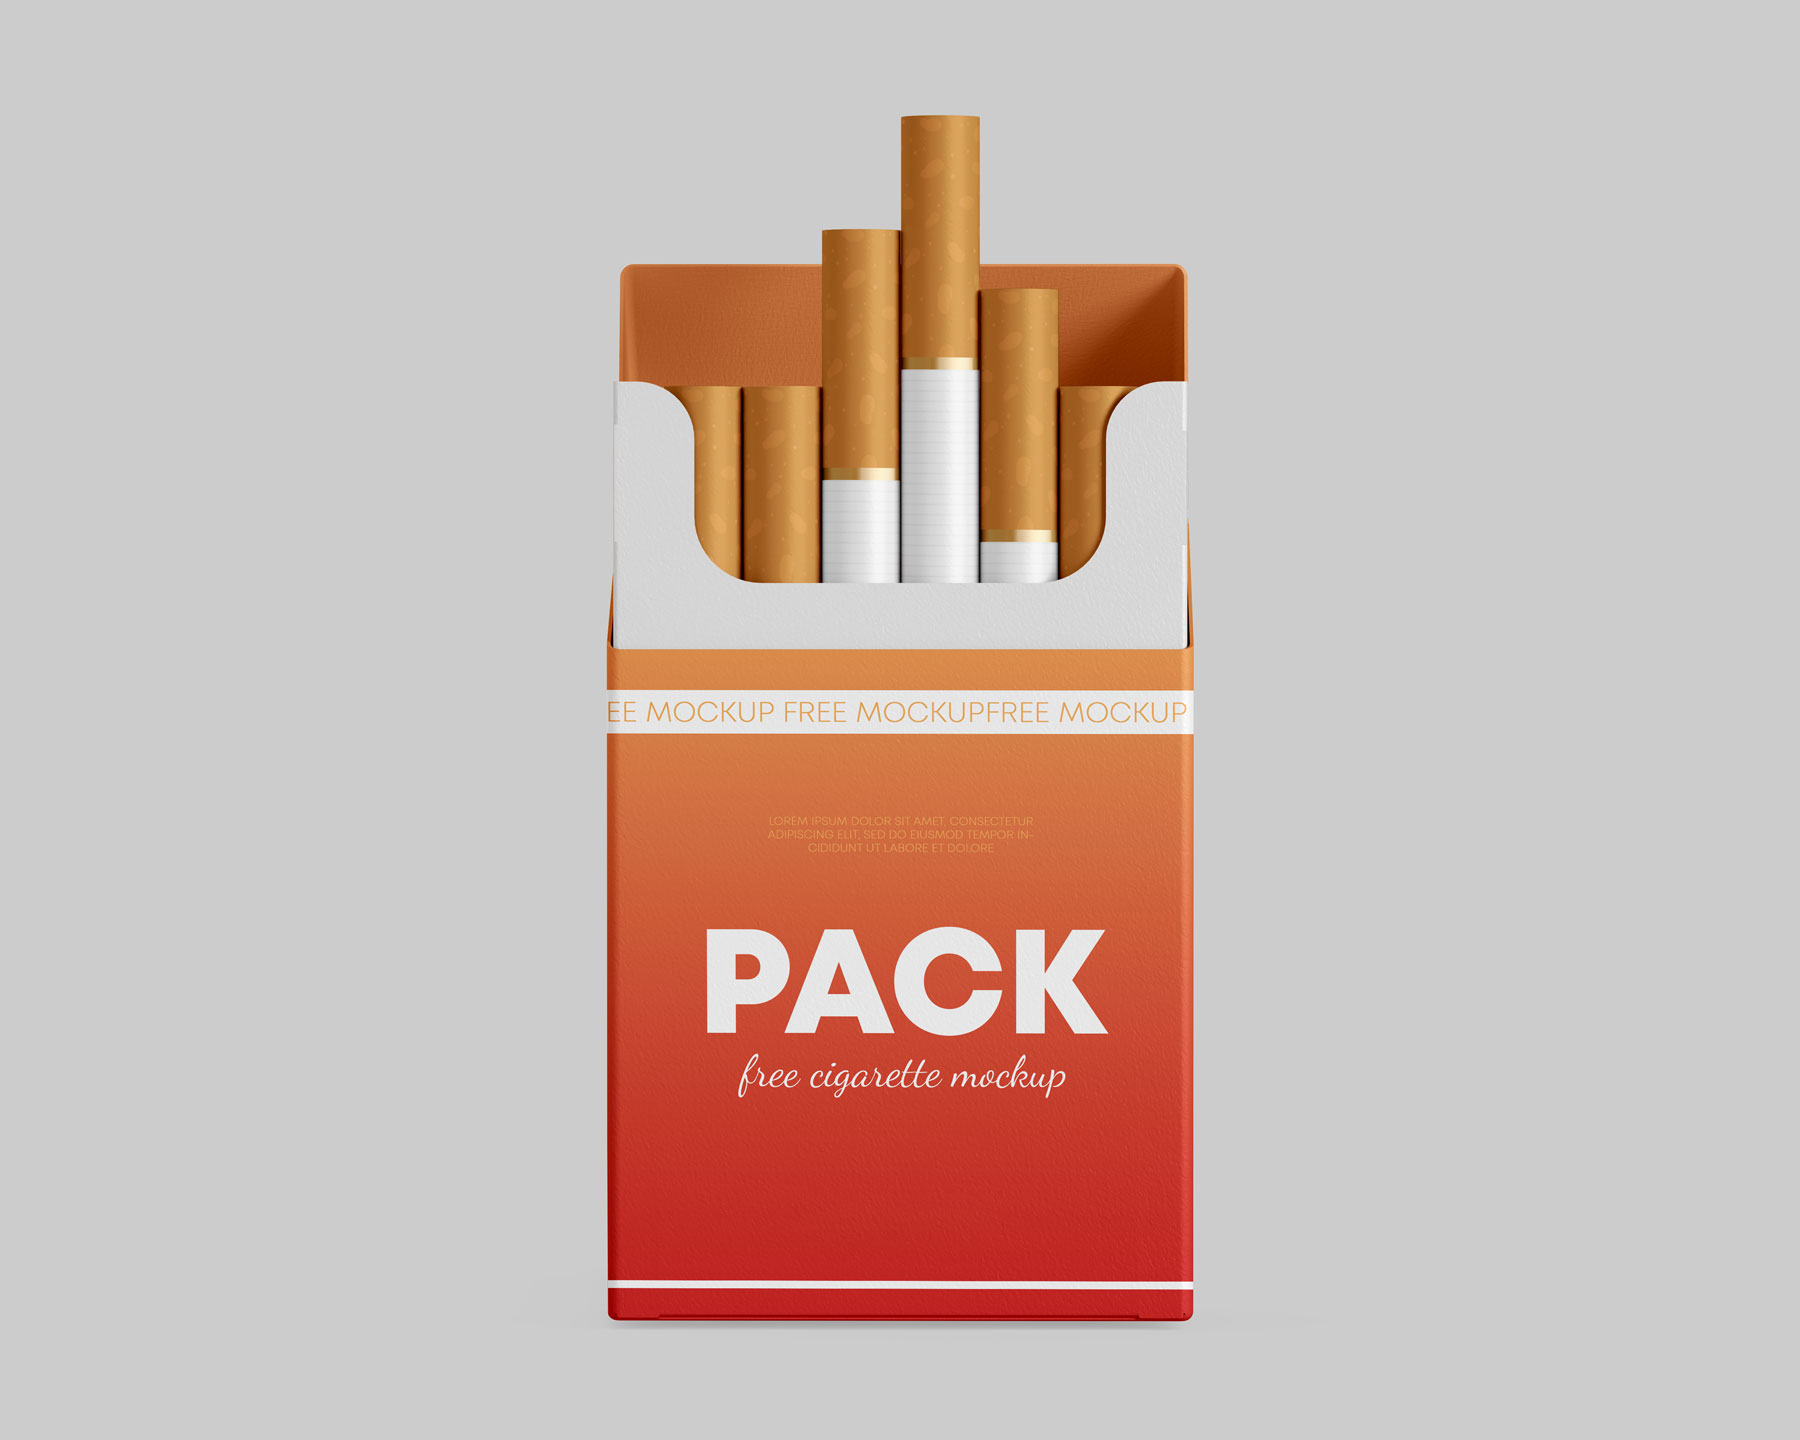 Free Cigarette Pack Box Mockup PSD Set 01